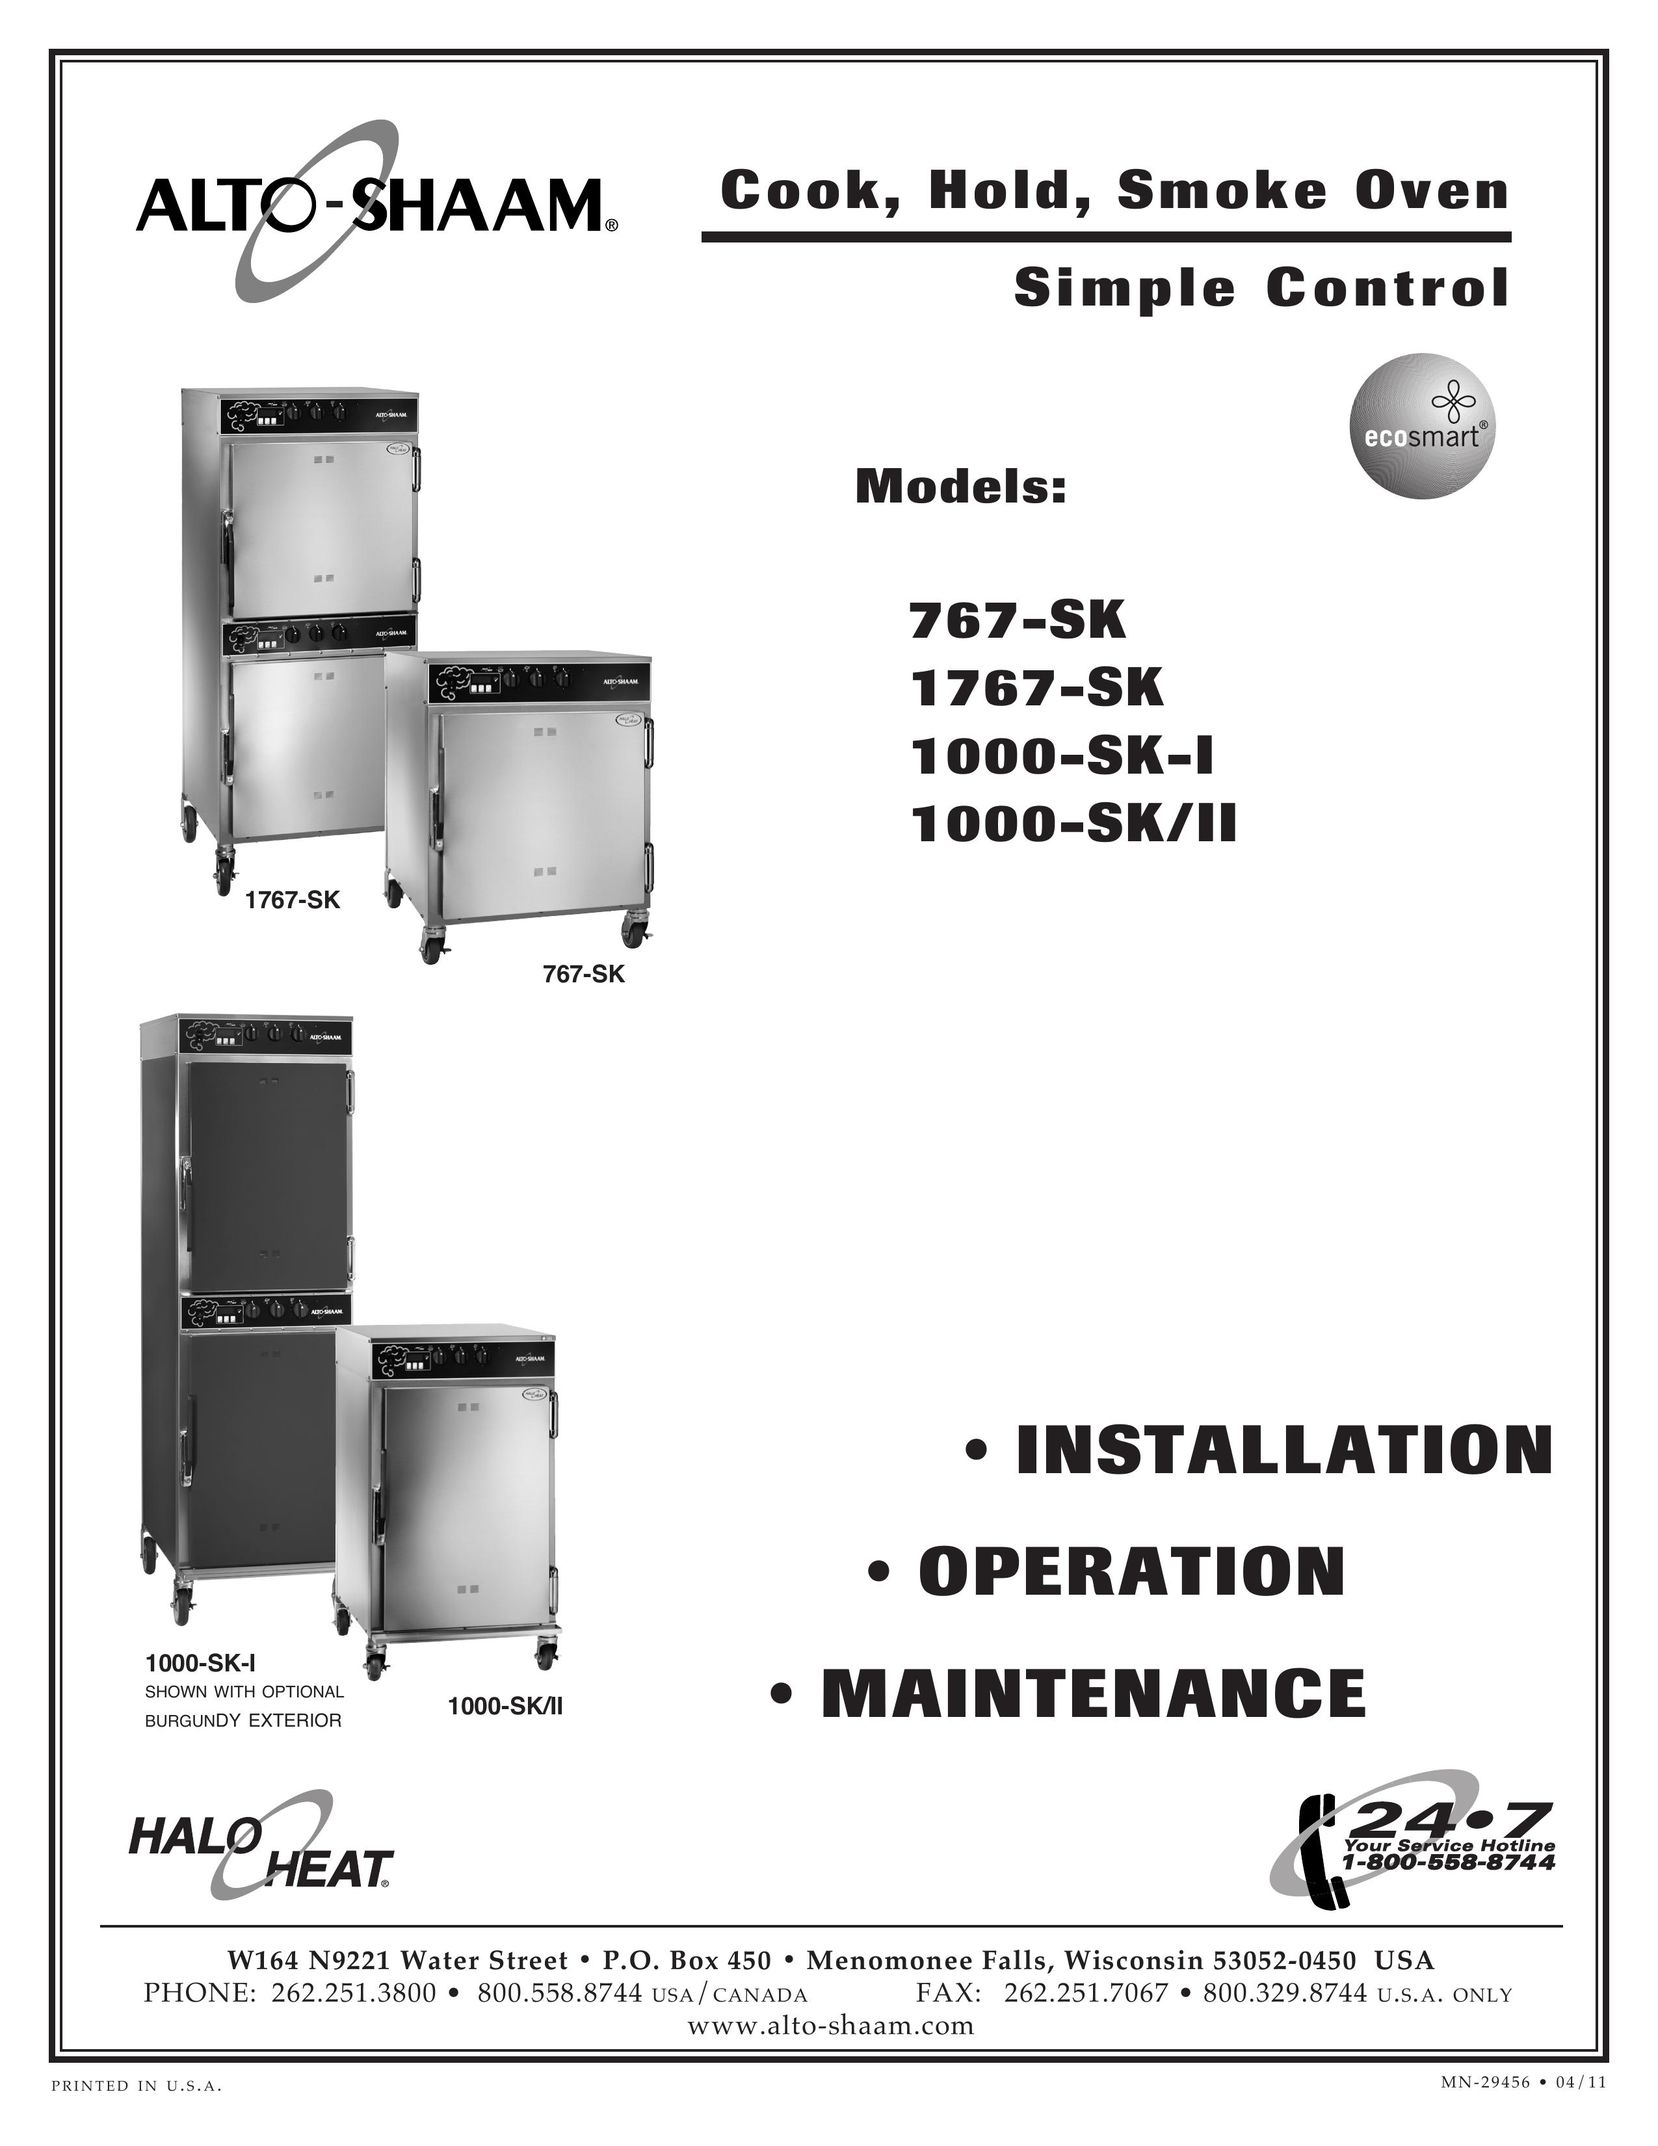 Alto-Shaam 1000-SK/II Double Oven User Manual